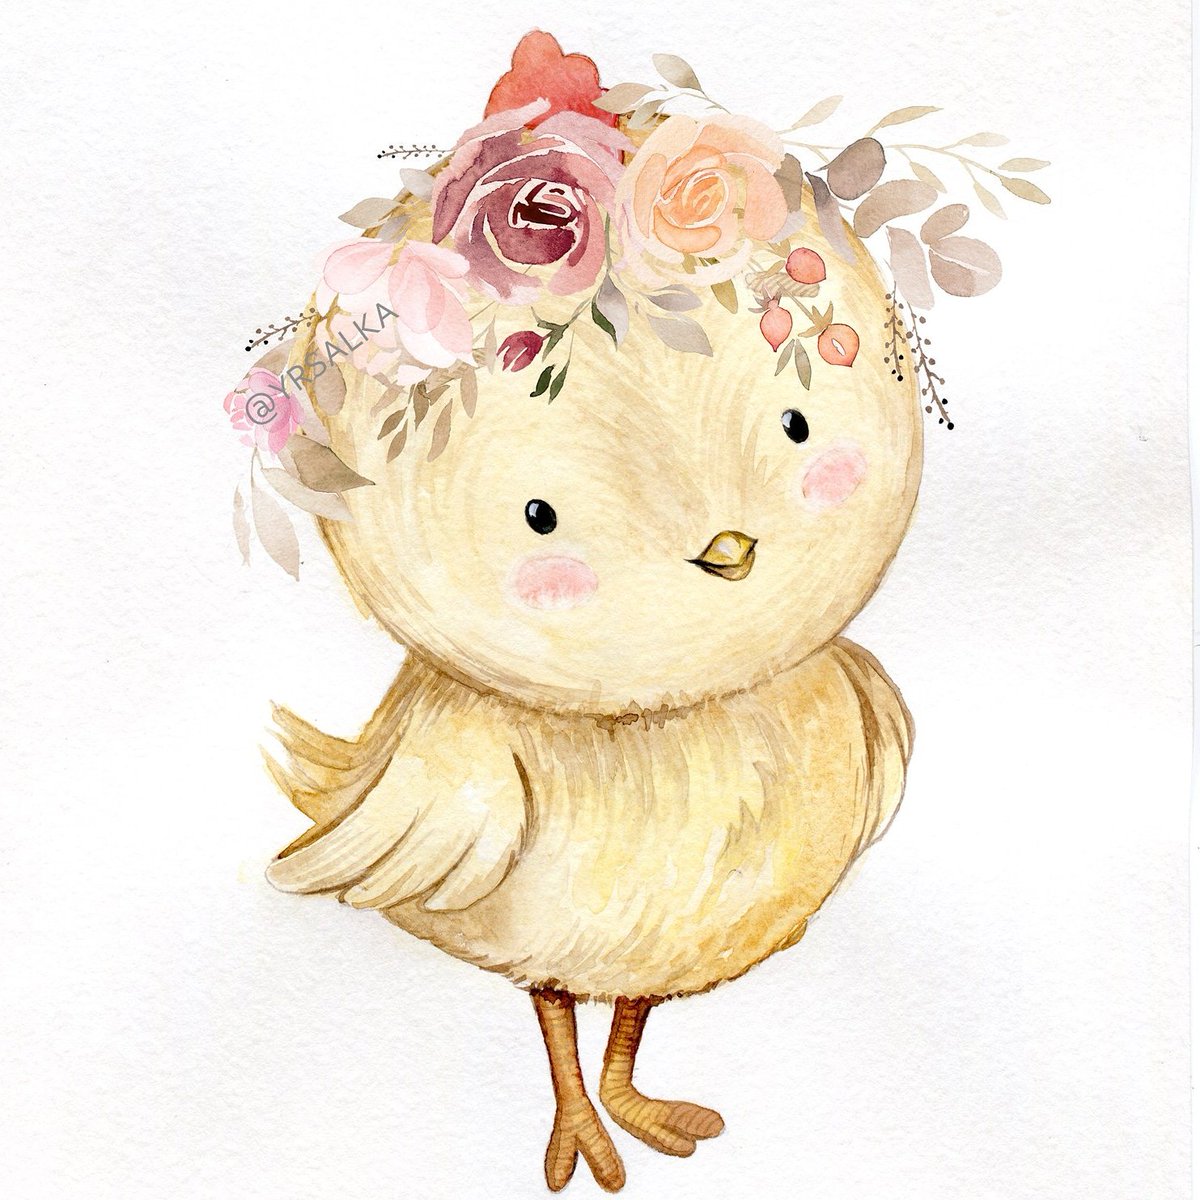 A young chicken's trying on a floral wreath #cutechick #farm #farmanim...